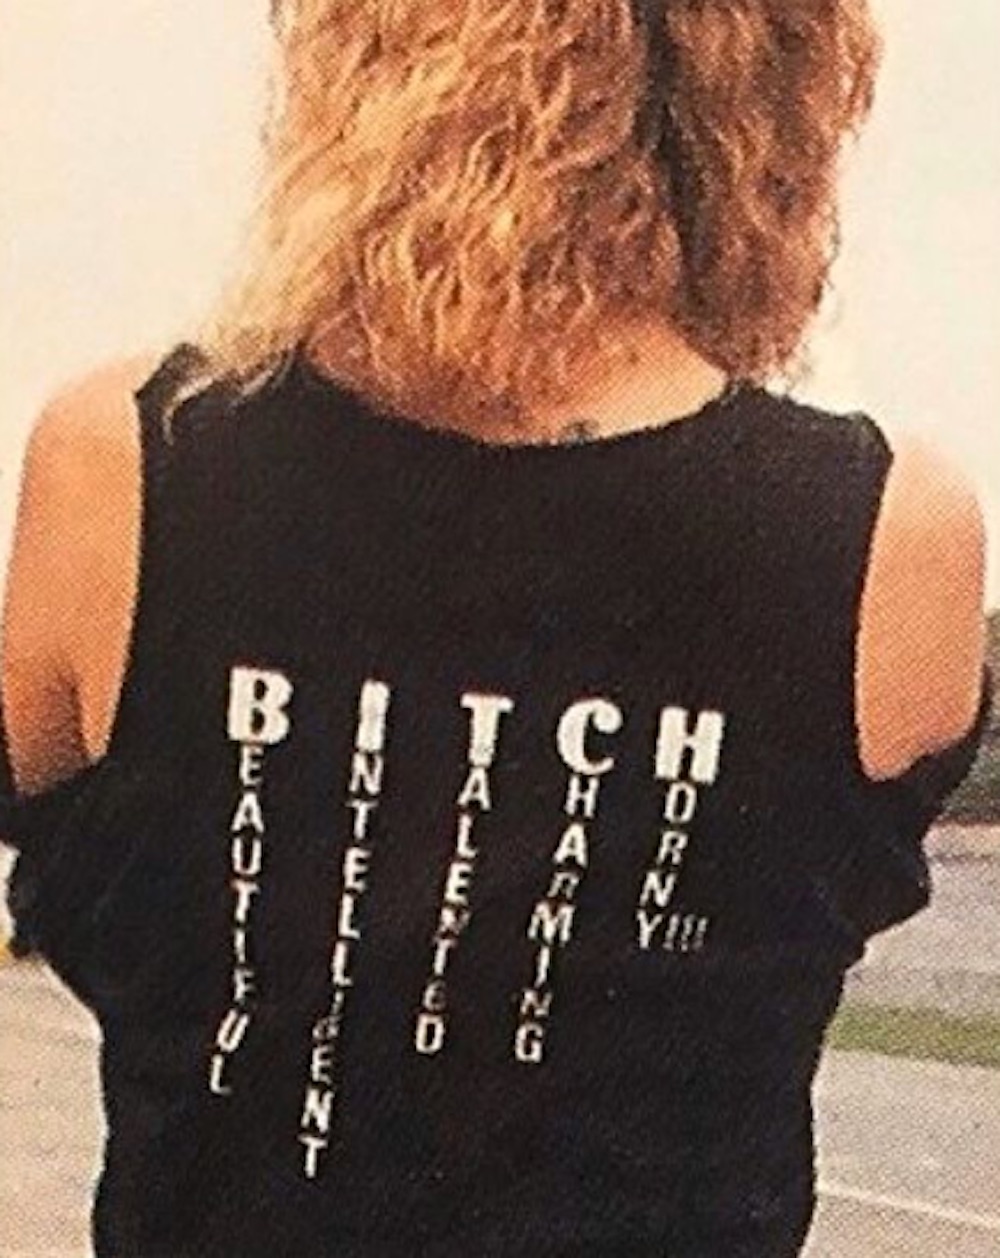 vintage t-shirt slogans